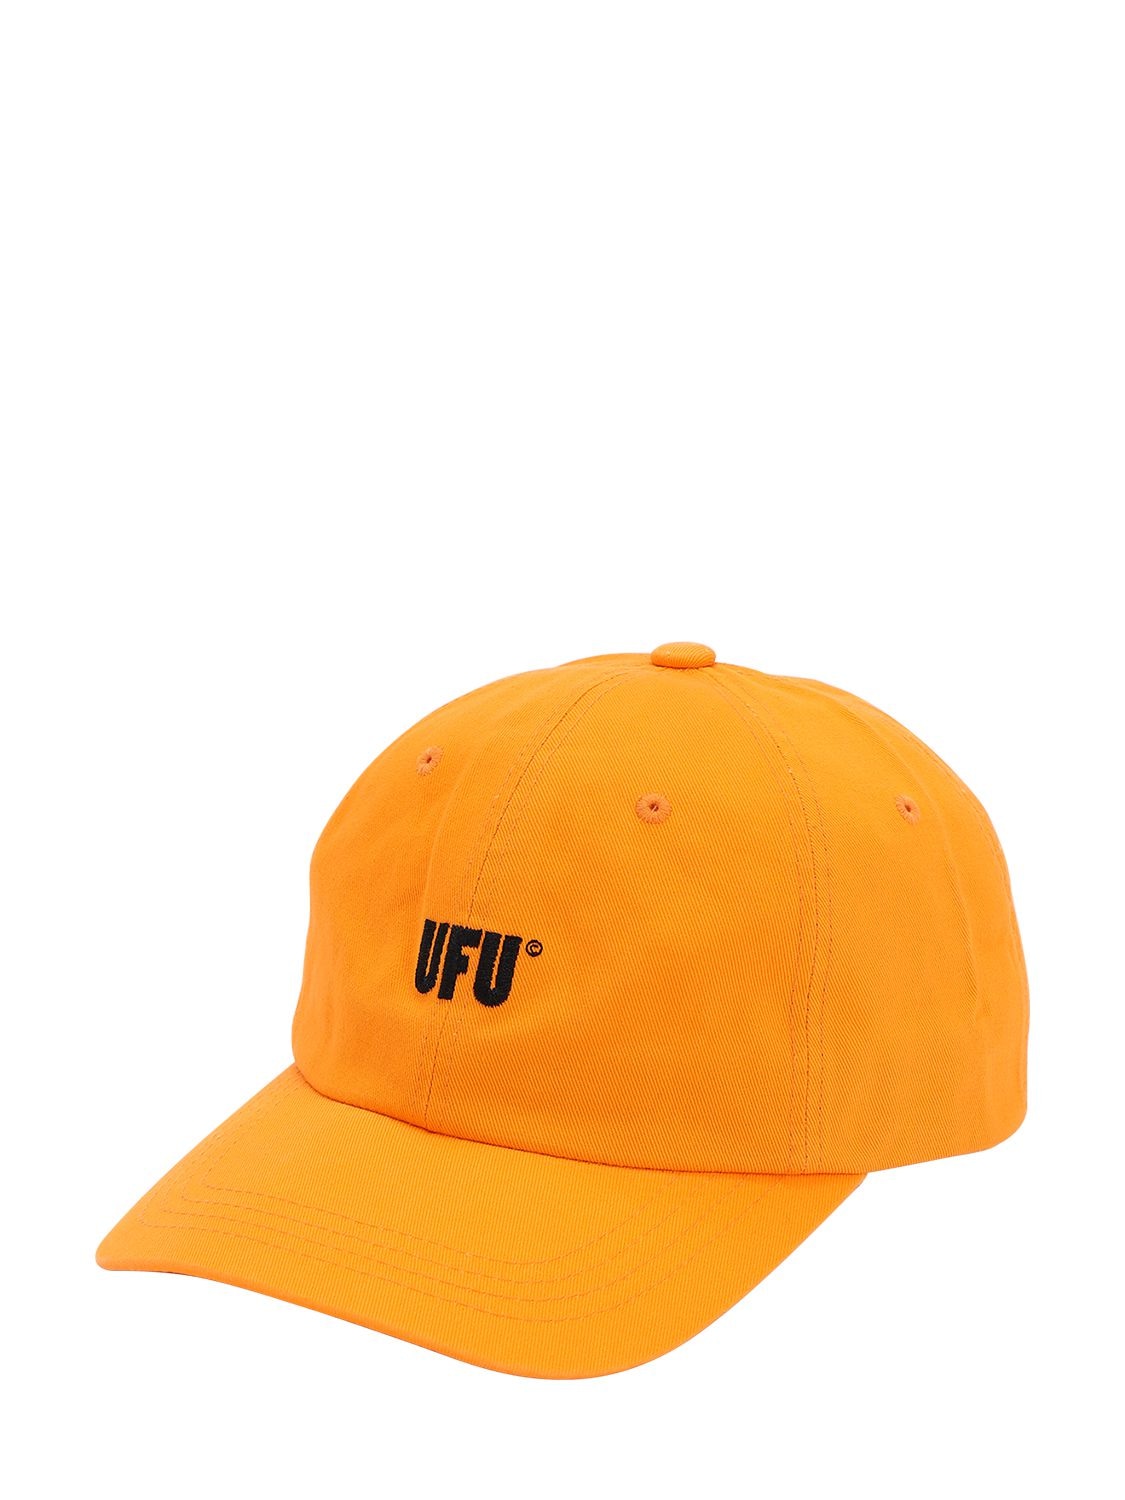 Ufu - Used Future Ufu Ad Cotton Canvas Baseball Hat In Orange